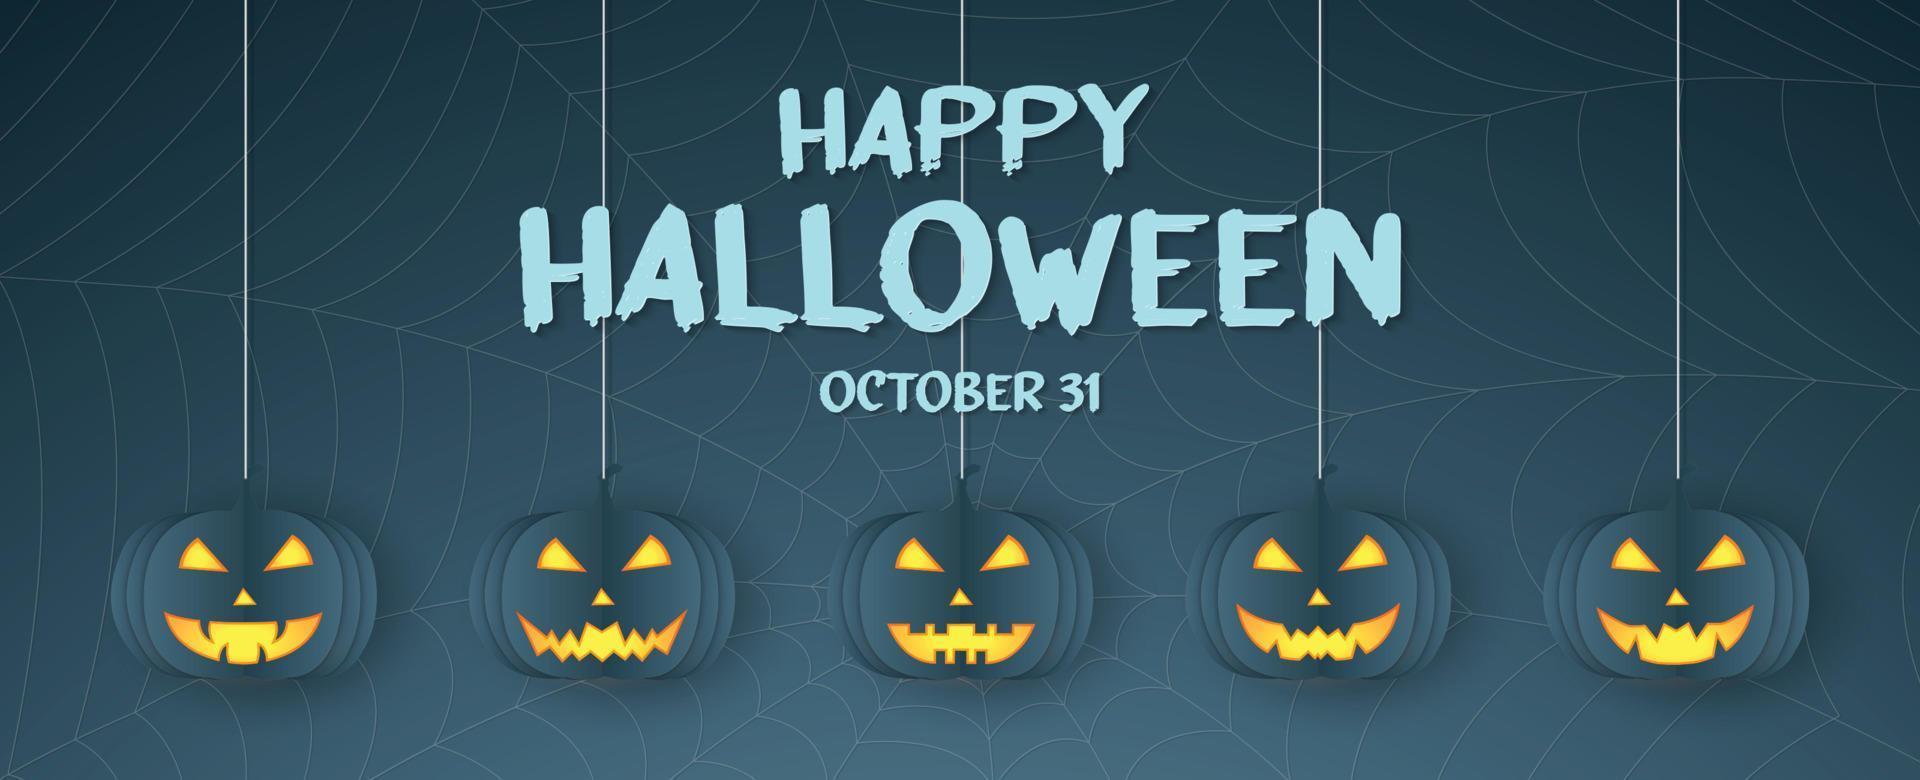 glad halloween, pumpahuvudet hängande, spindelnät, spindelnät bakgrund med text vektor